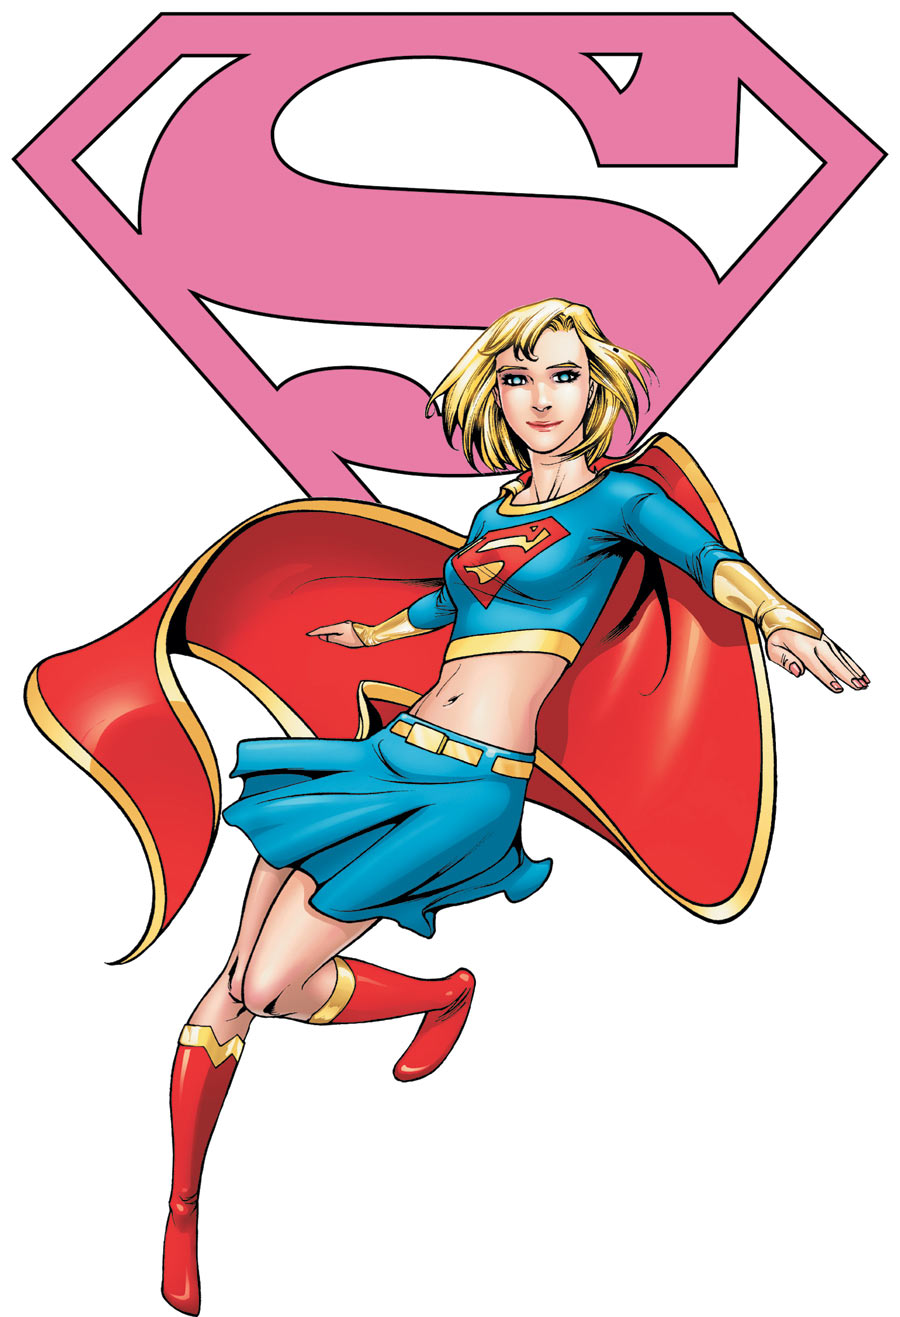 Dc comics: i simboli degli eroi (parte 3) - superman 